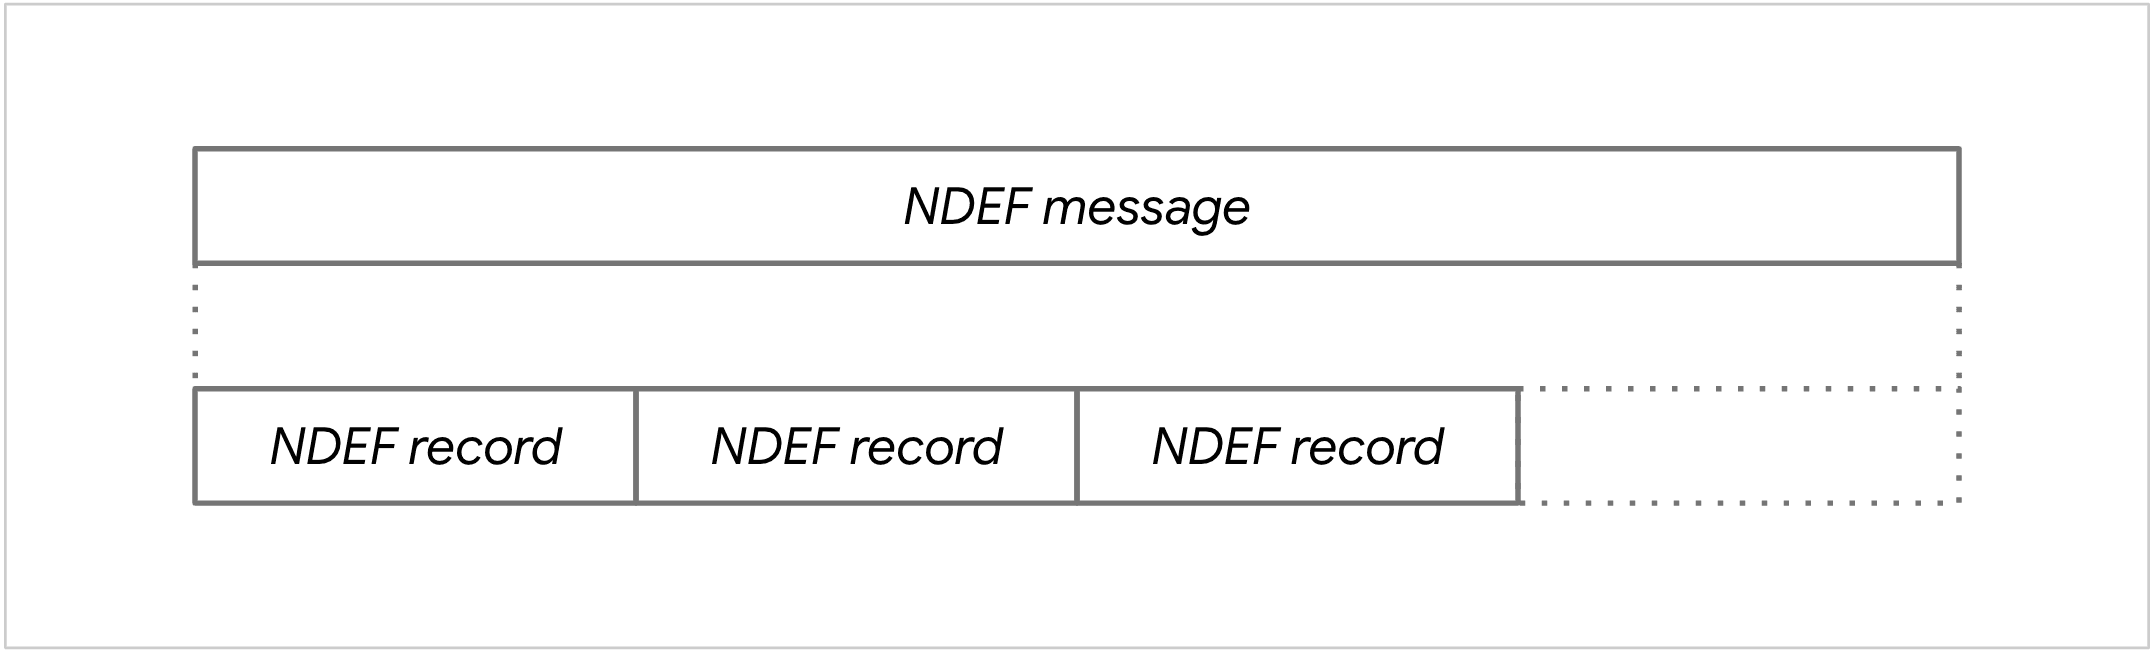 NDEF mesajının şeması